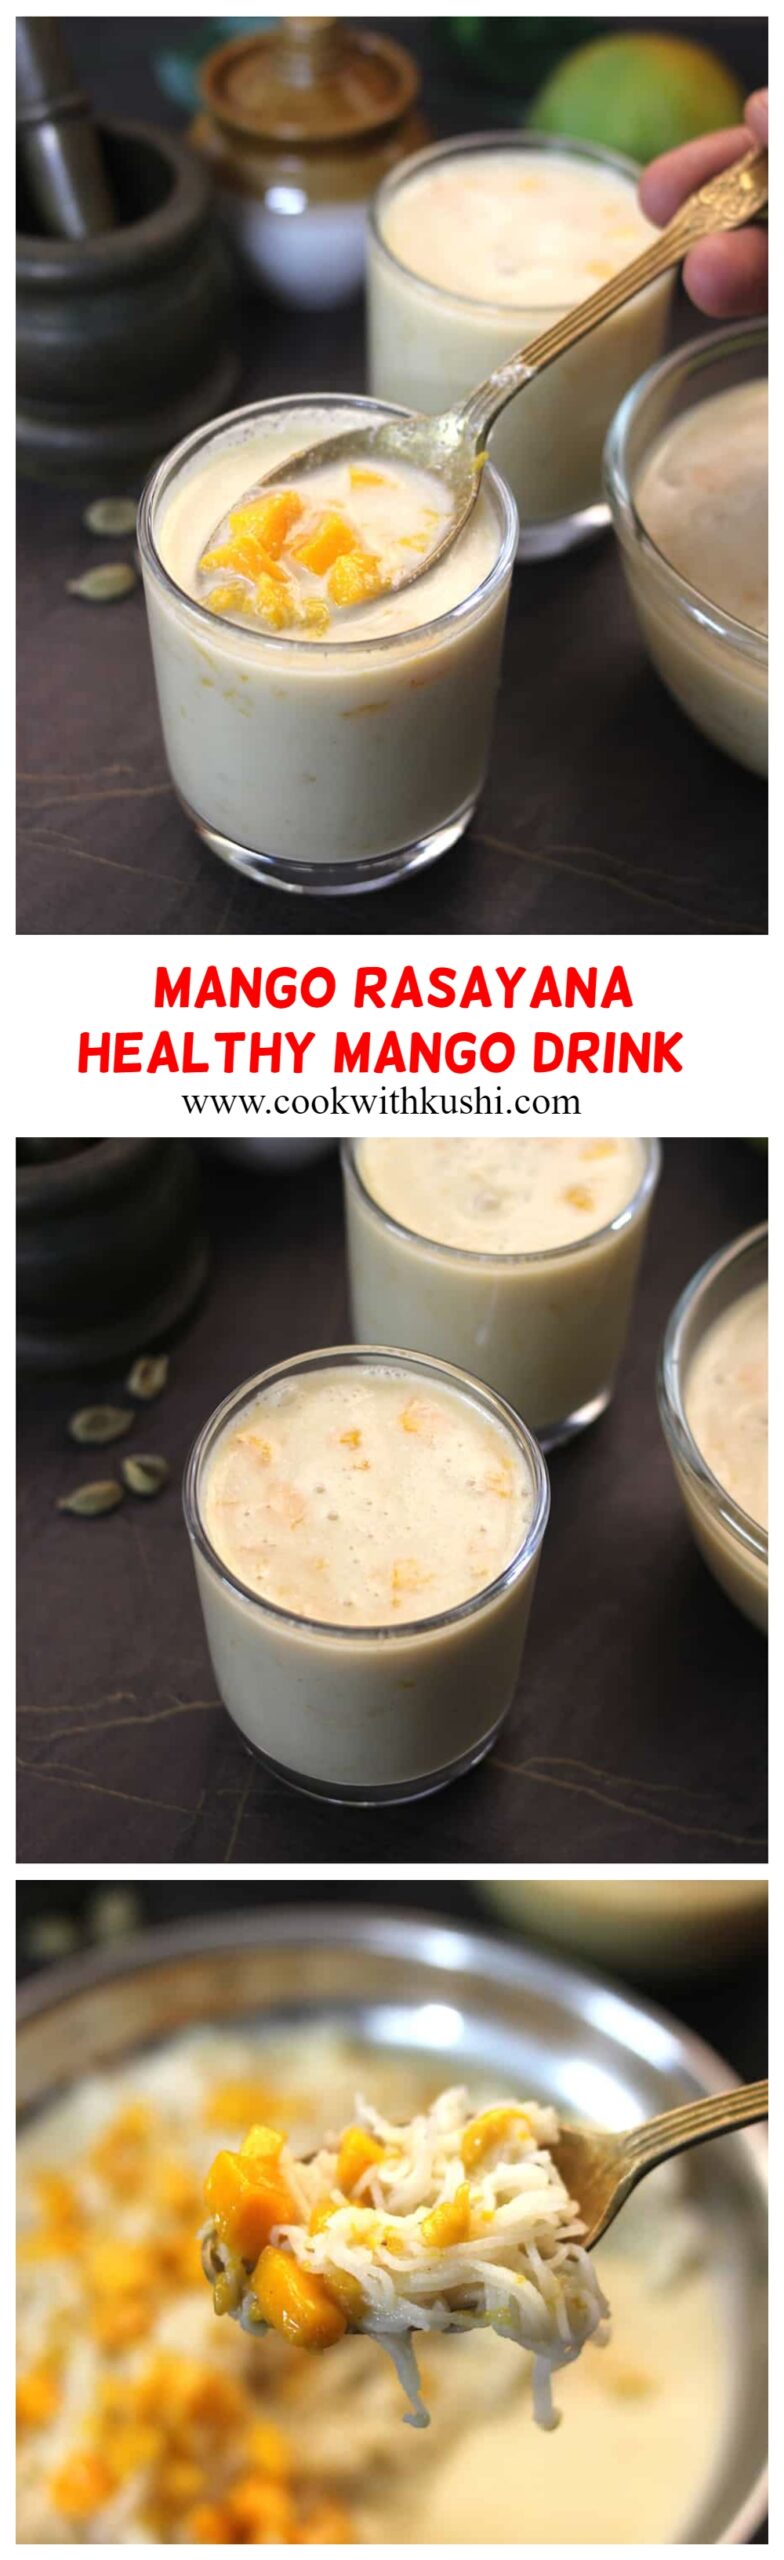 How to make mango rasayana, aamras, #Mangoes #drink #dessert